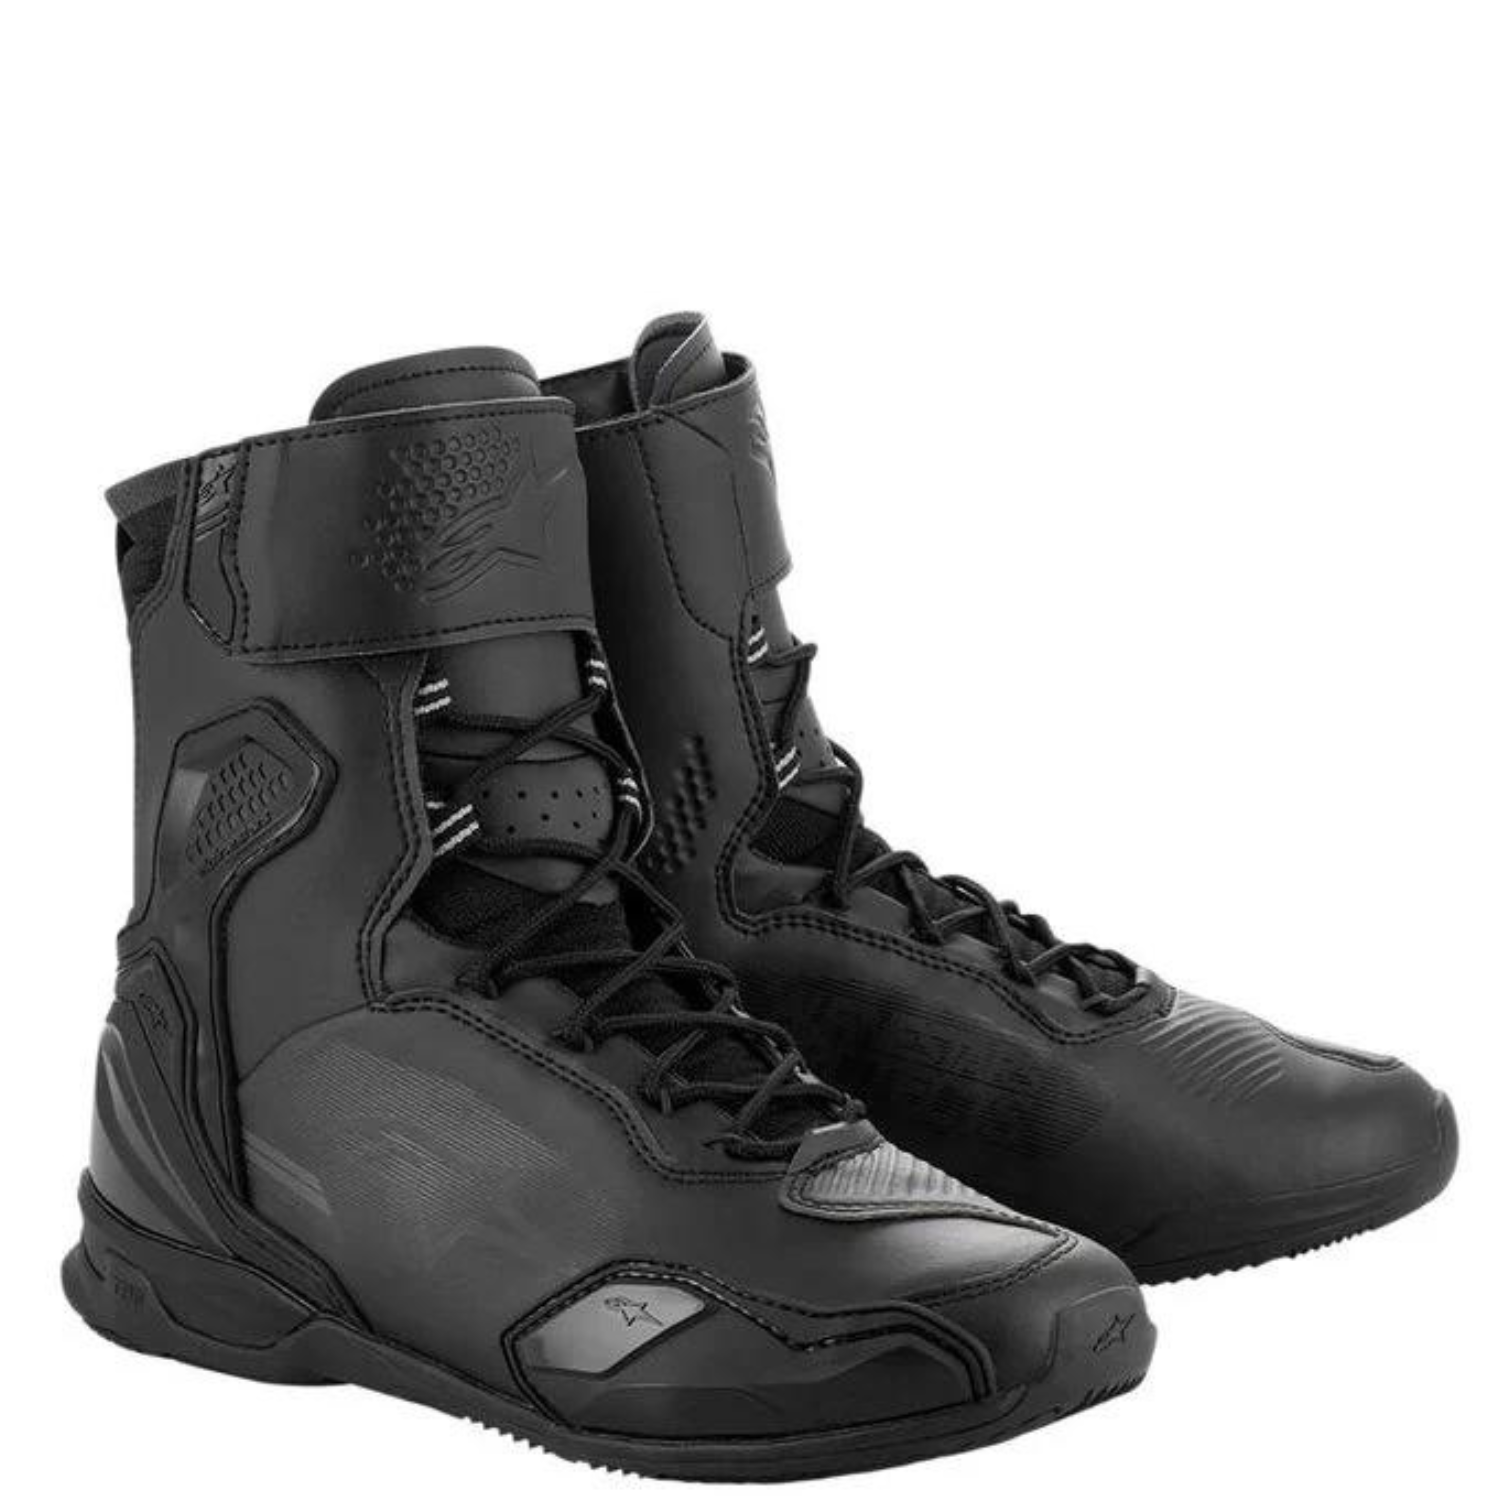 Image of Alpinestars Superfaster Shoes Black Size US 14 ID 8059347260730